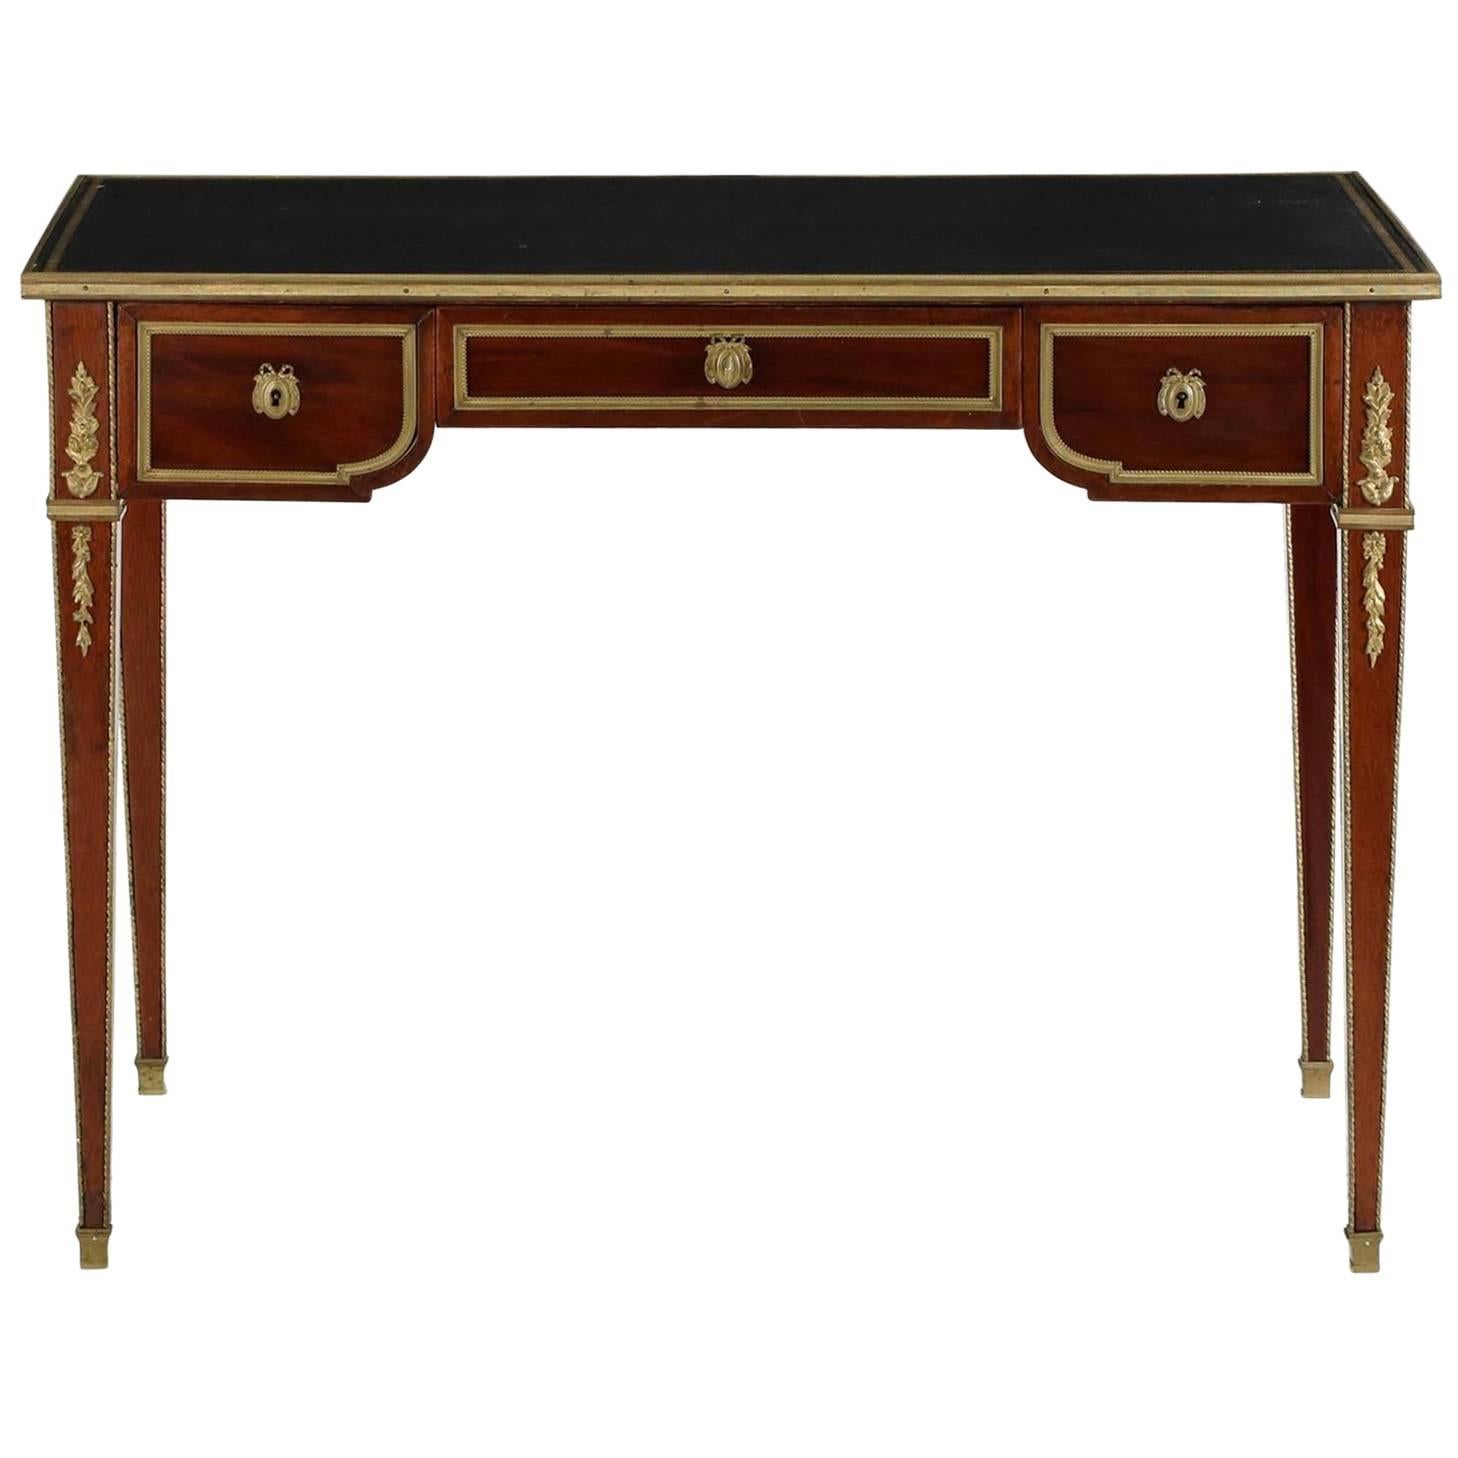 20th Century French Neoclassical Antique Mahogany Bureau Plat Writing Table Desk